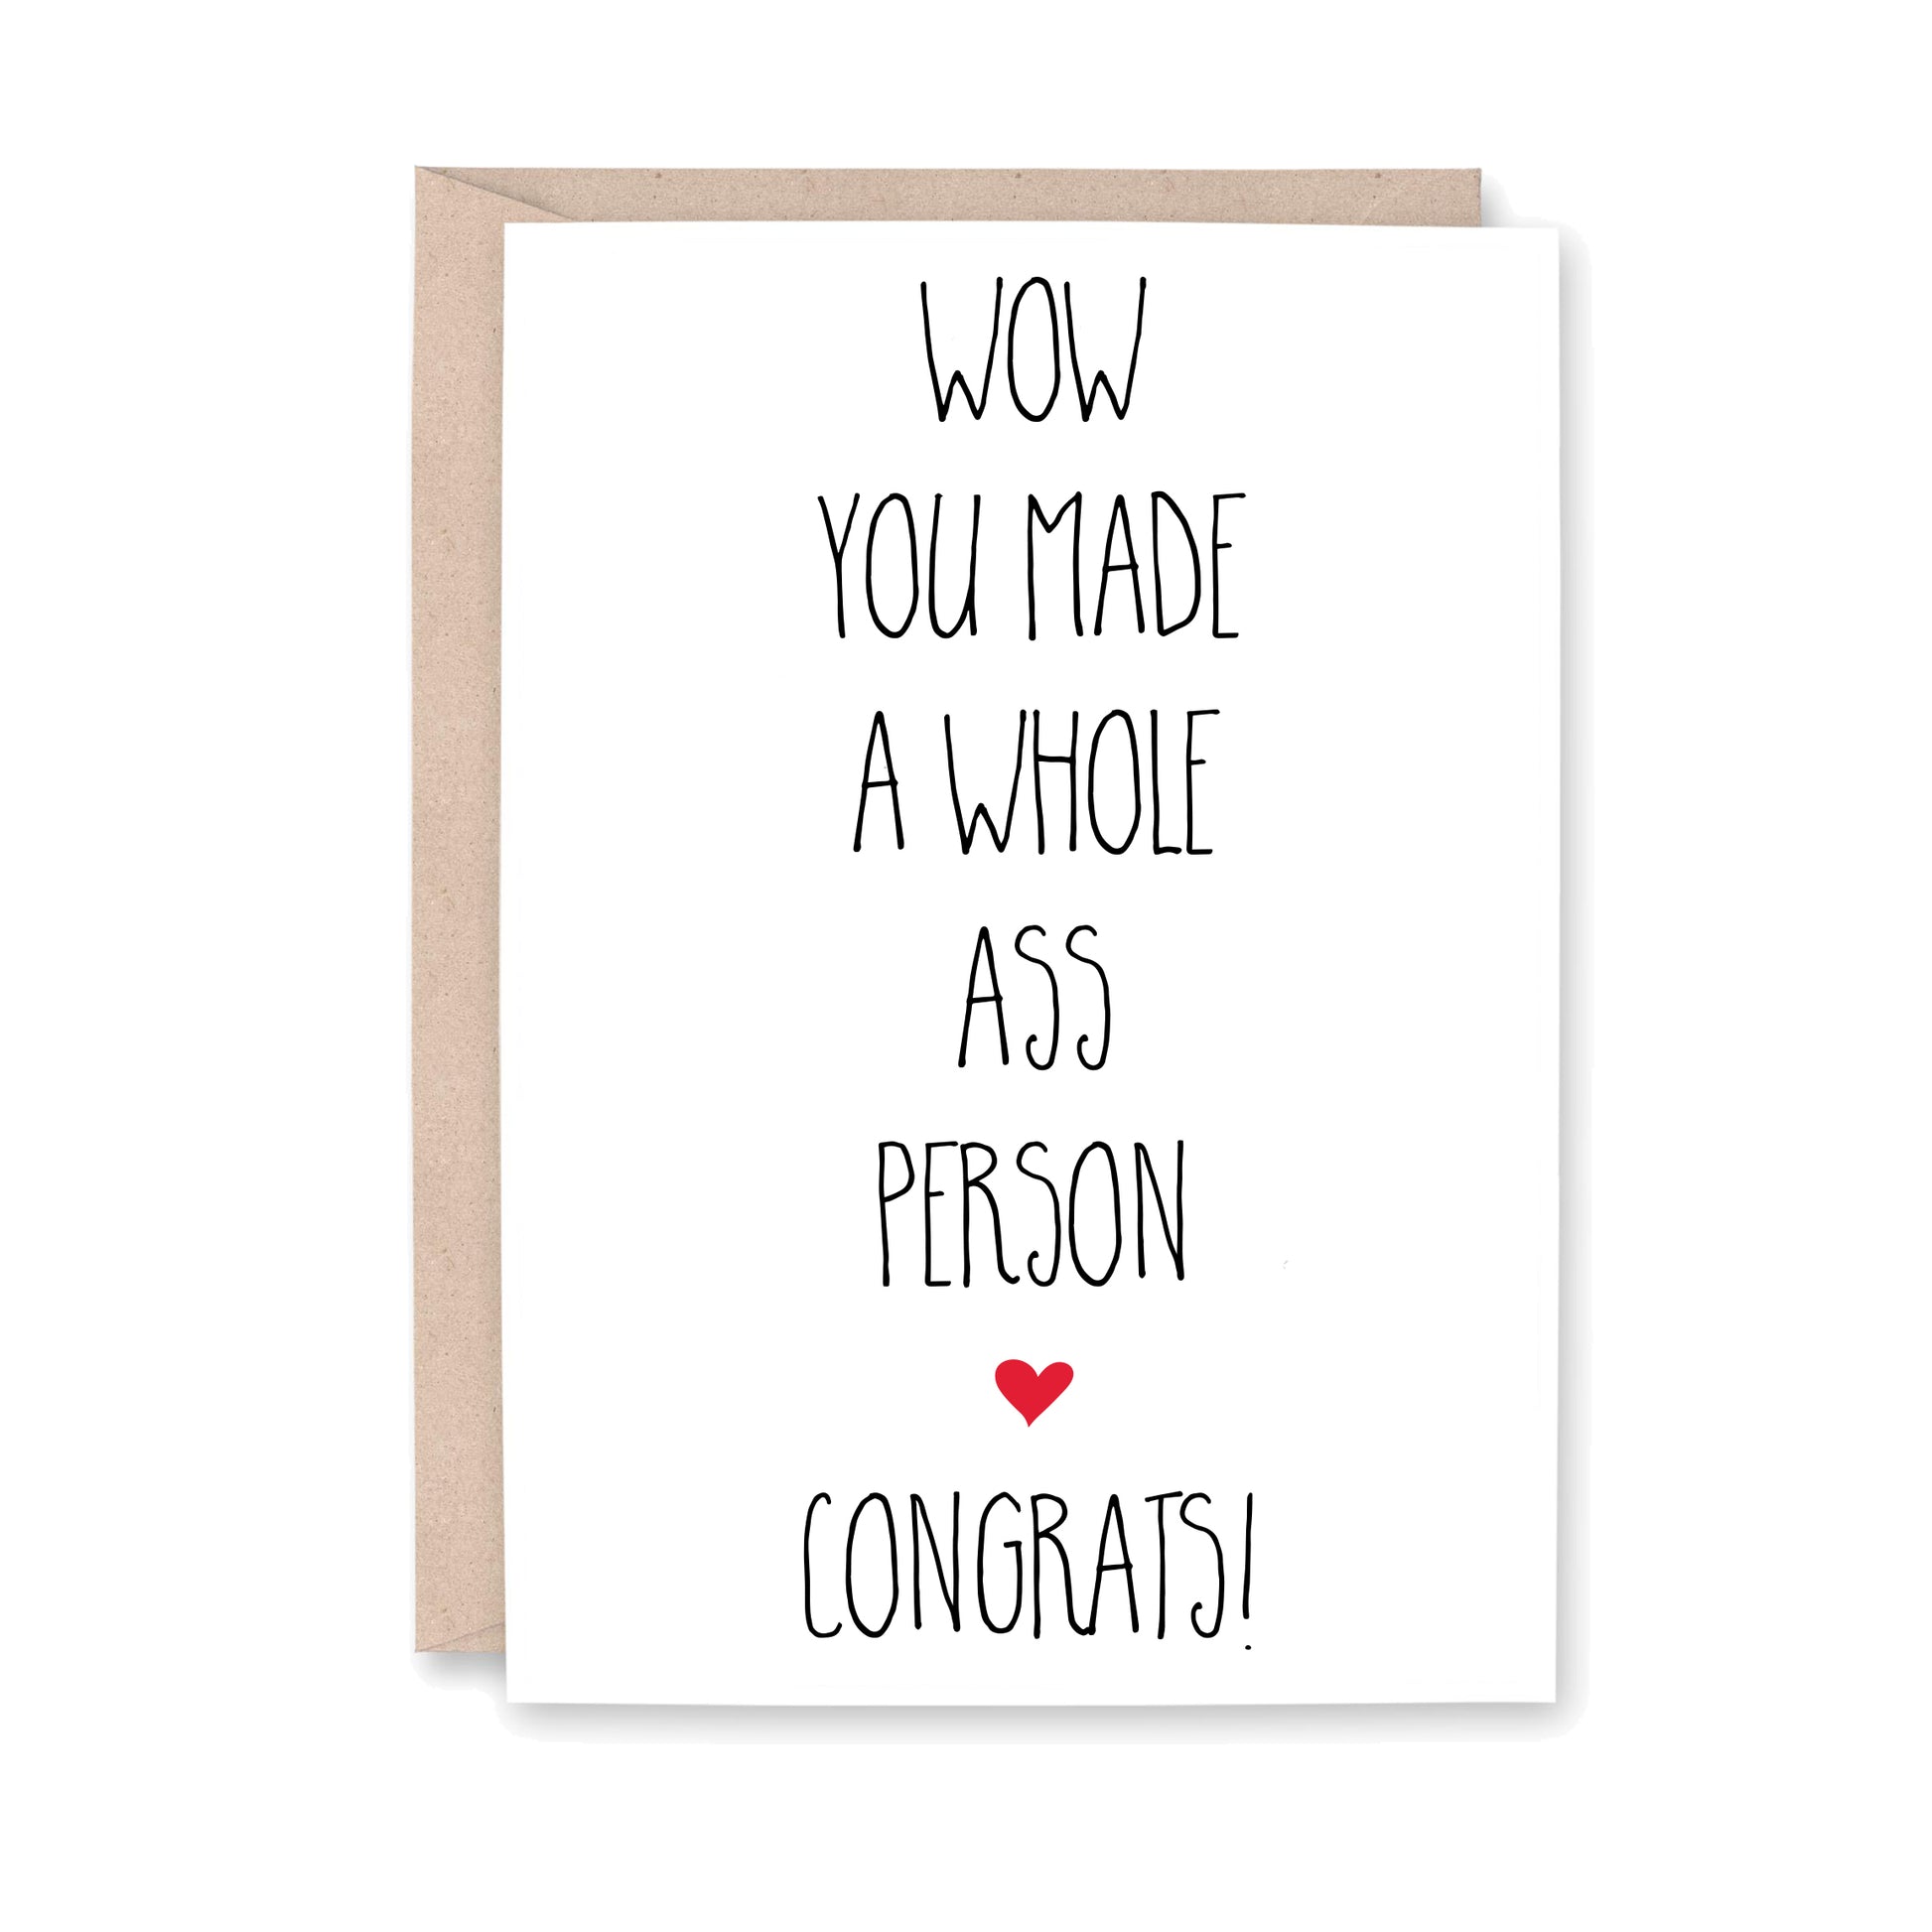 Wow you made a whole ass person Congrats!